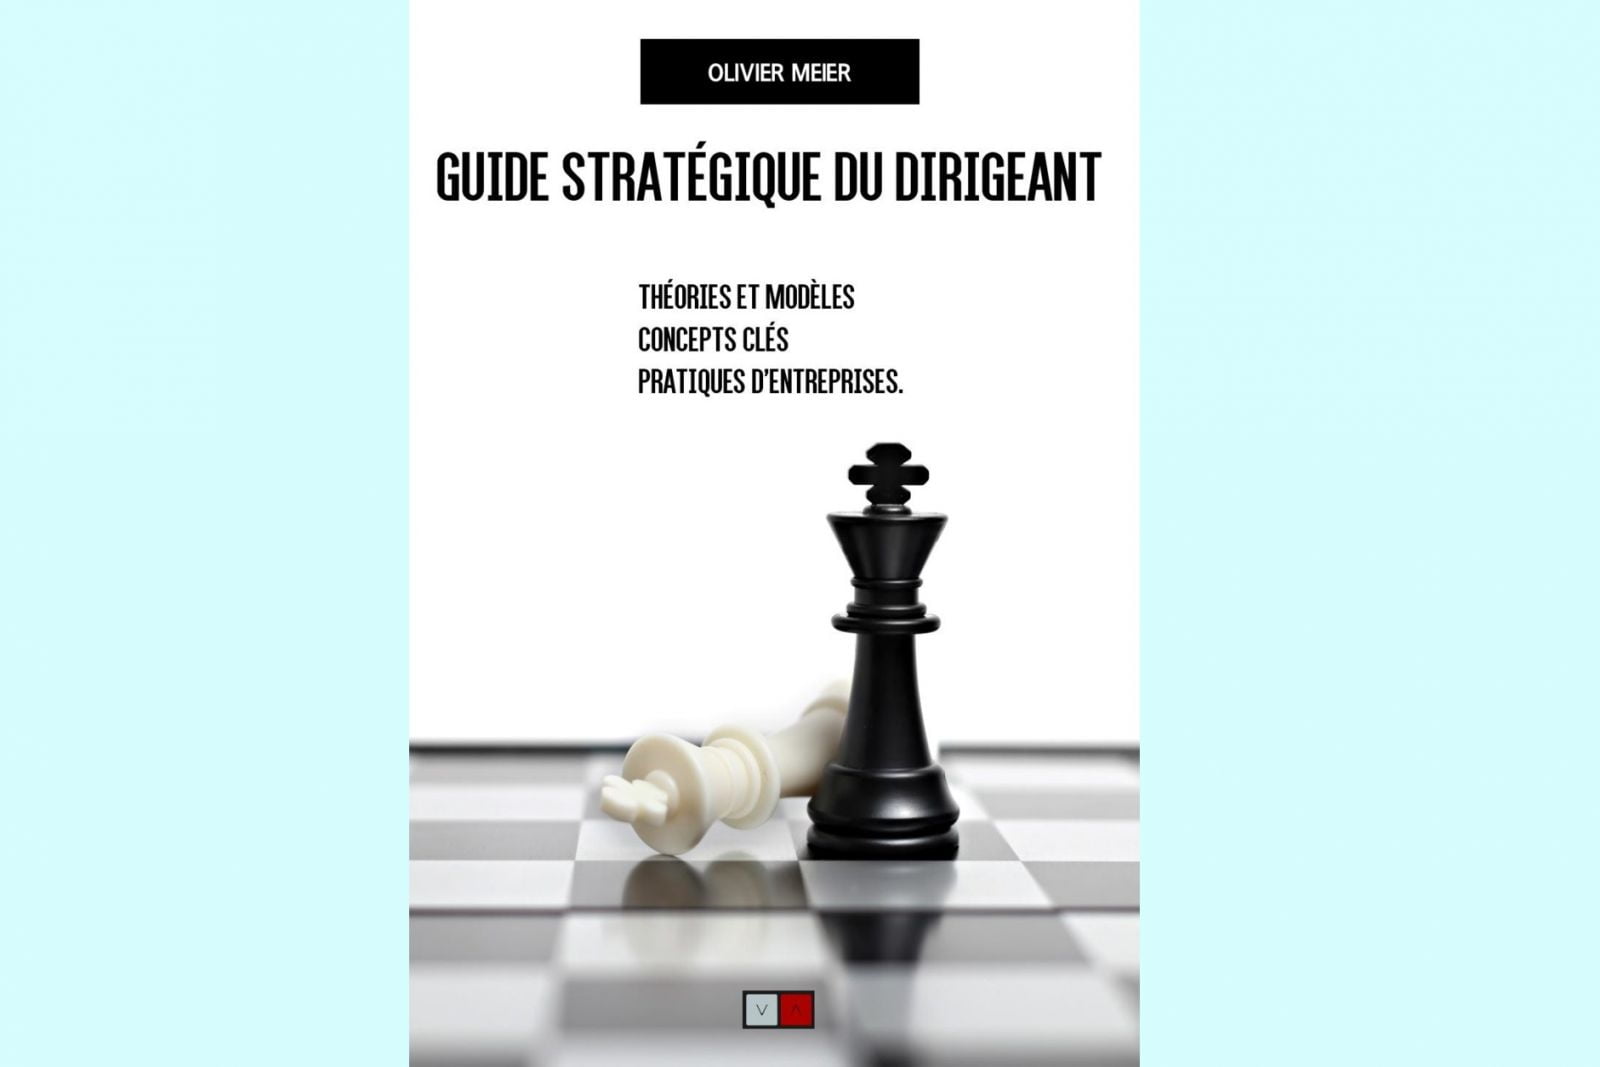 Olivier Meier Guide Strategique Digireant